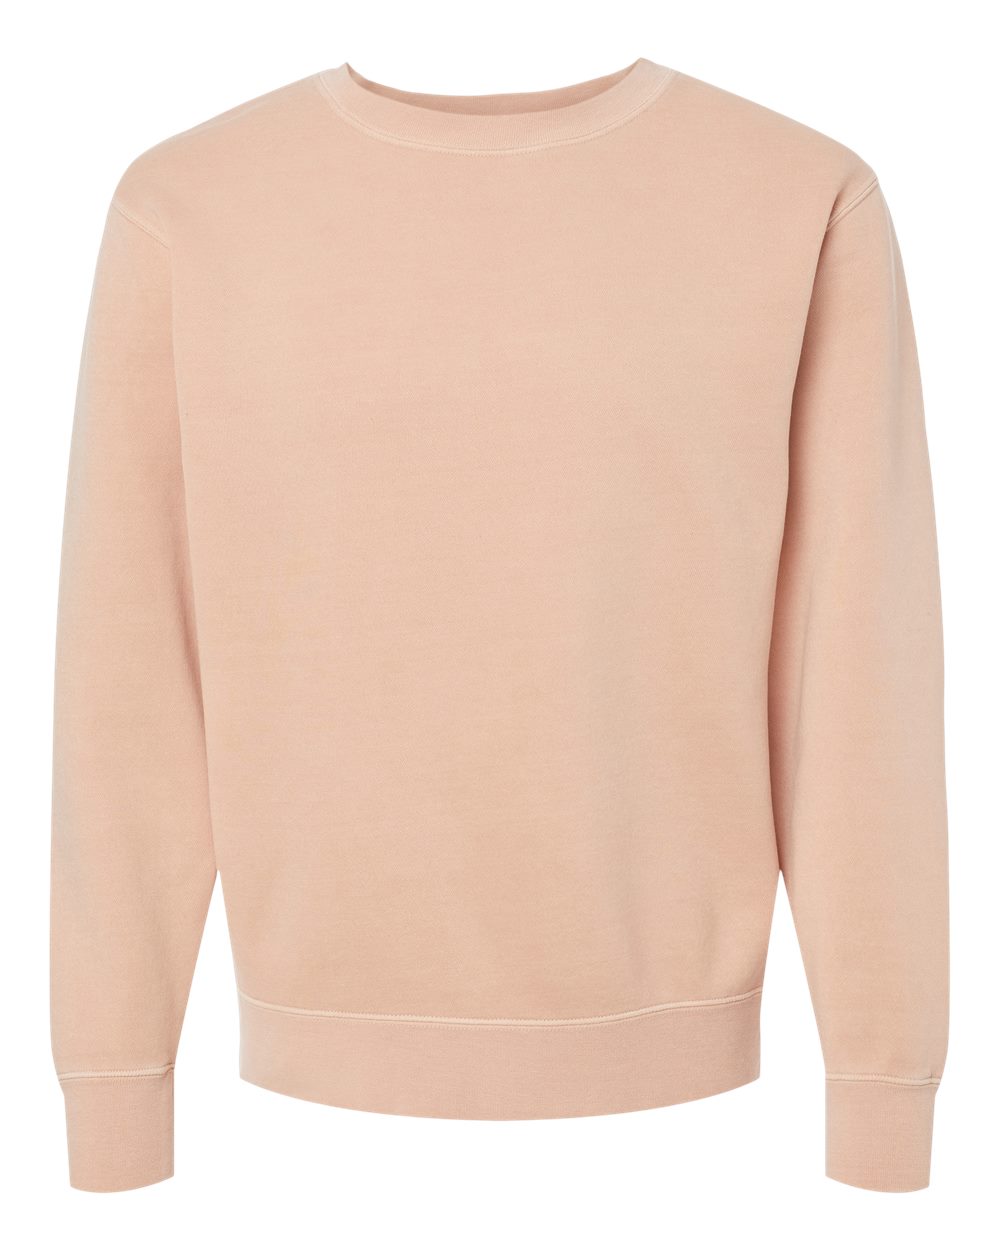 Independent Pigment-Dyed Crewneck Sweatshirt (PRM3500) in Pigment Dusty Pink